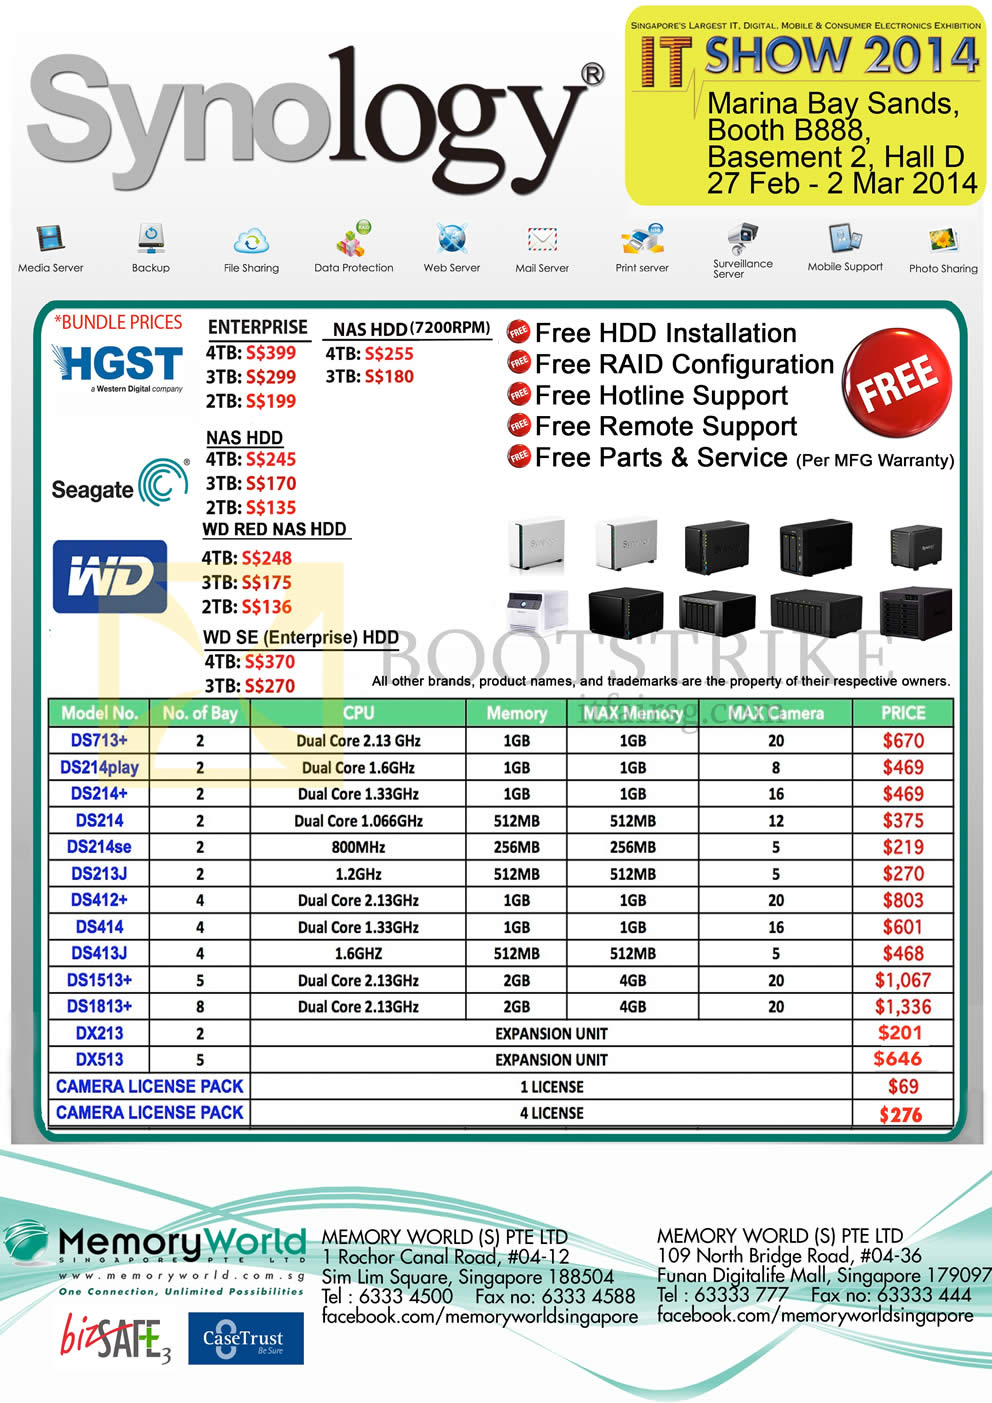 IT SHOW 2014 price list image brochure of Memory World Synology NAS DiskStation DS713 Plus, DS214, DS213, DS412, DS414, DS1513, DS1813 Plus